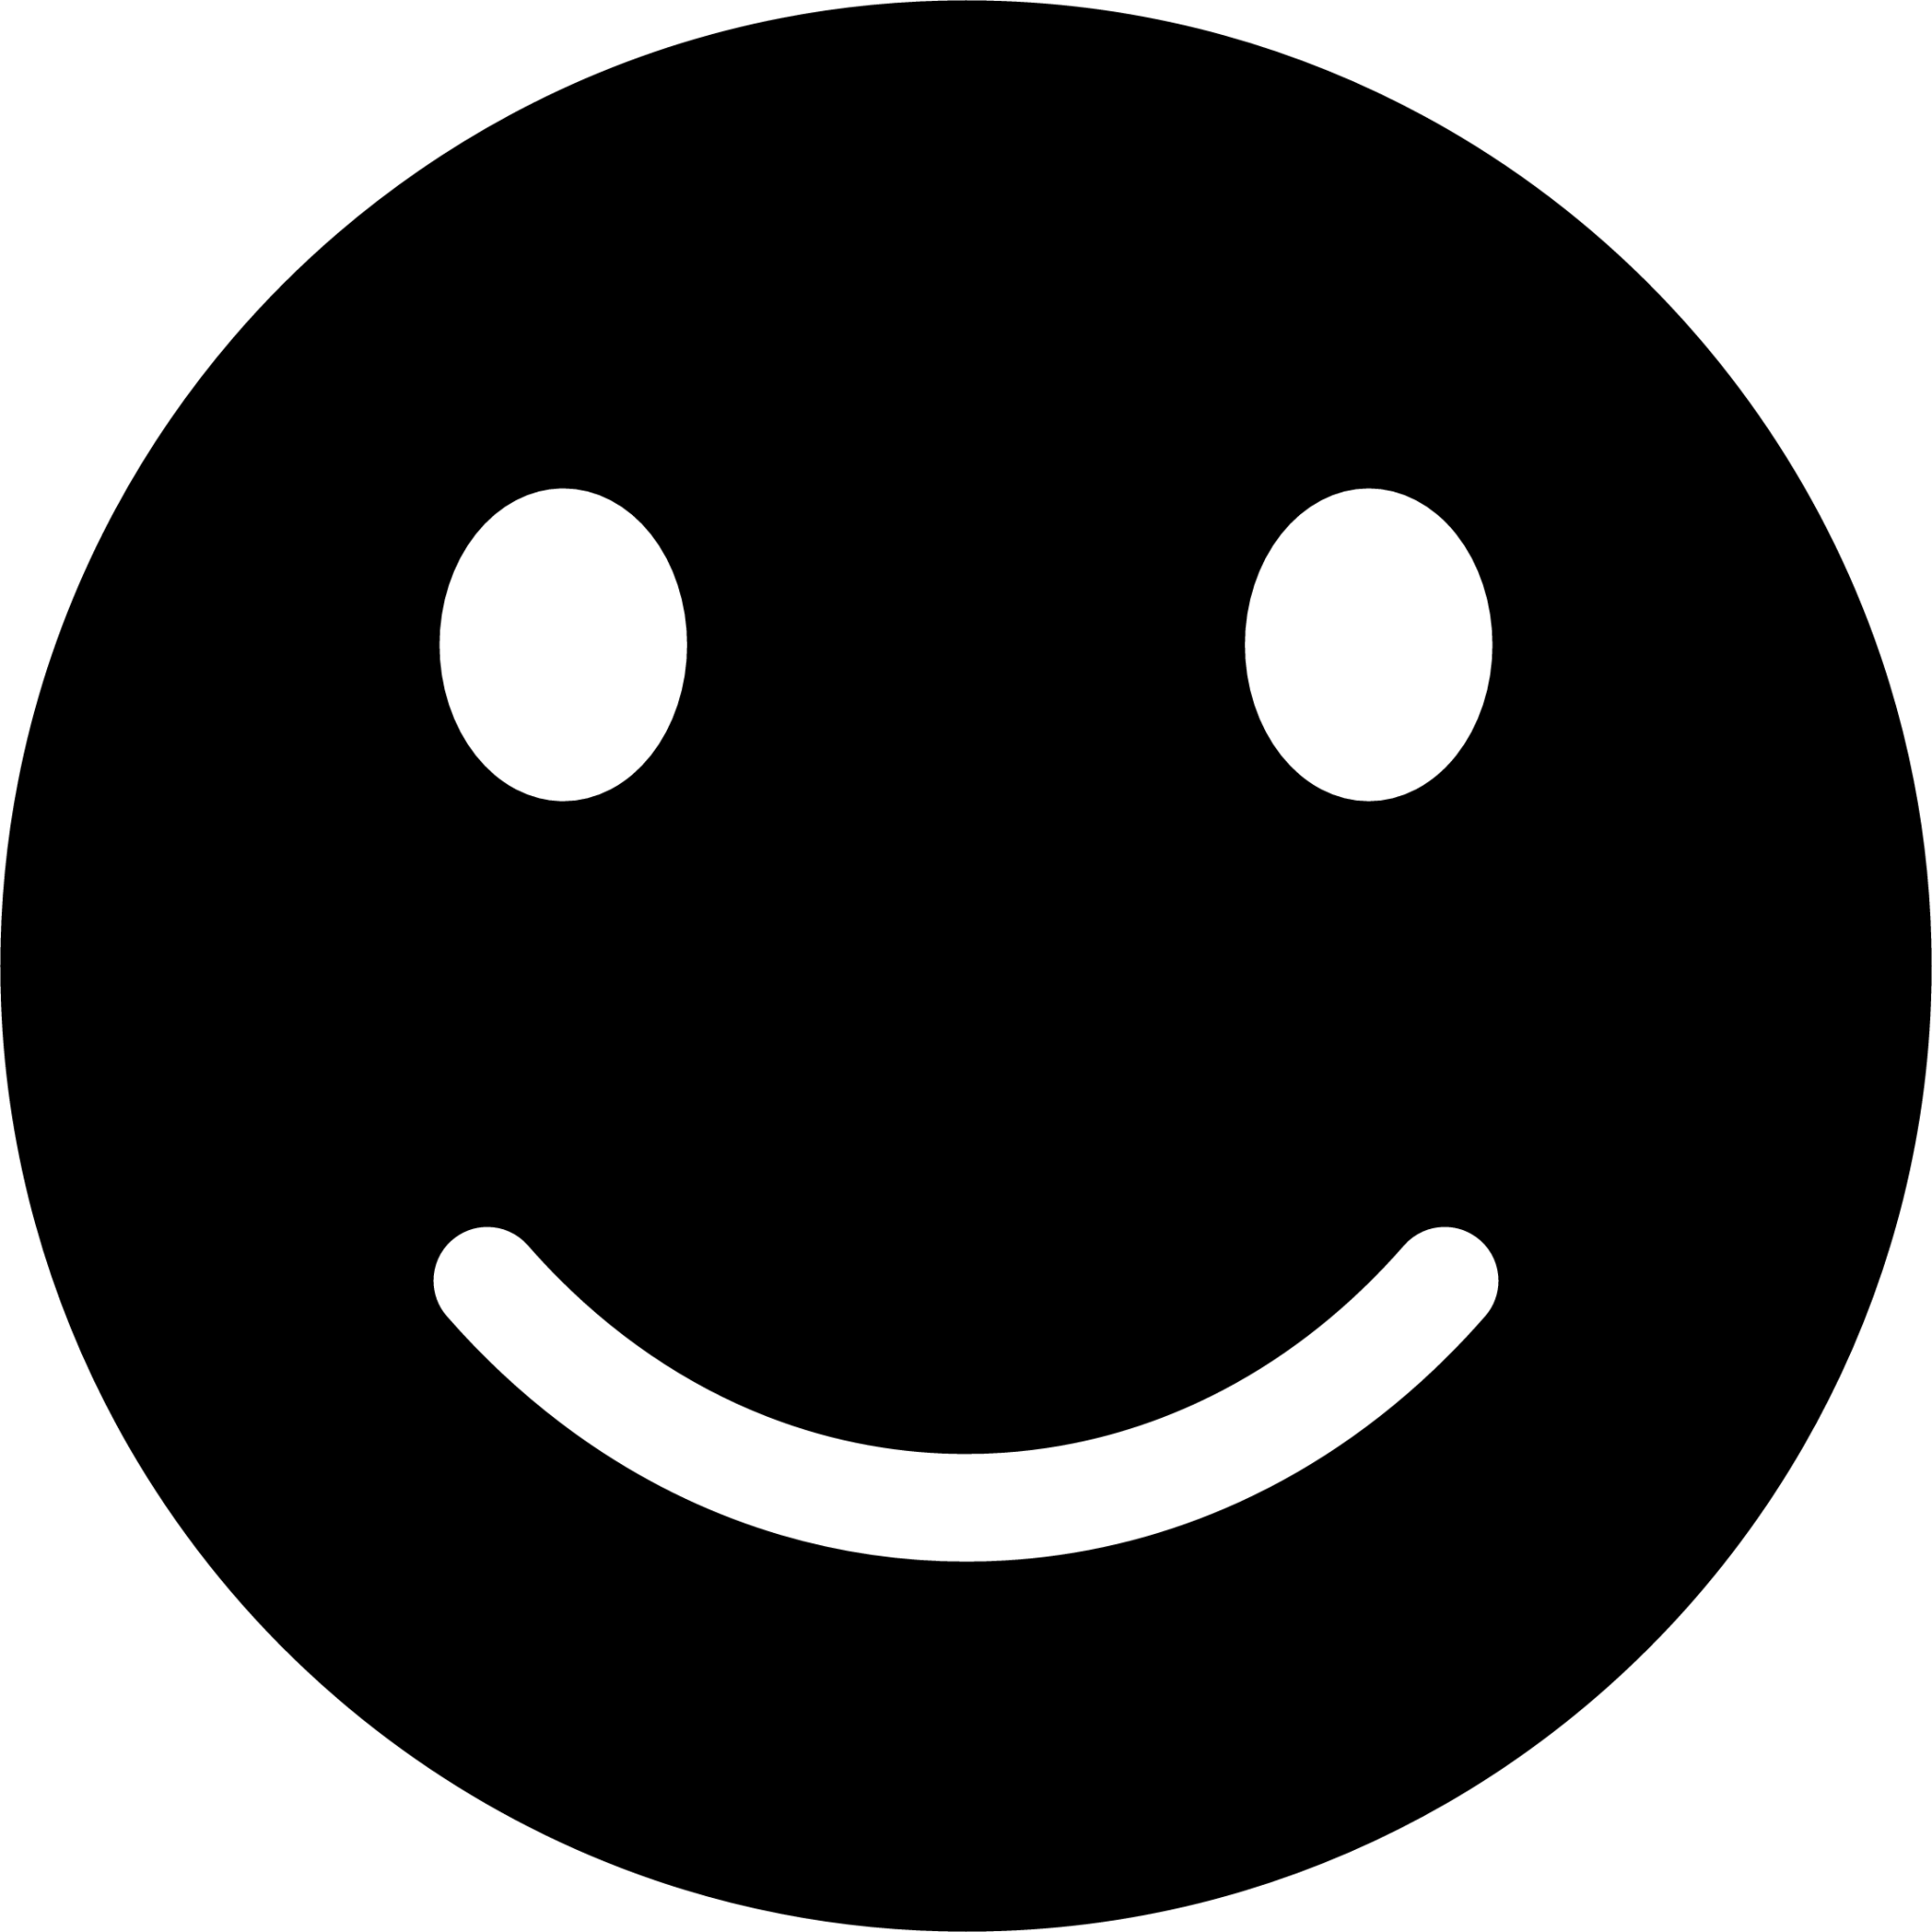 black smiling face emoji